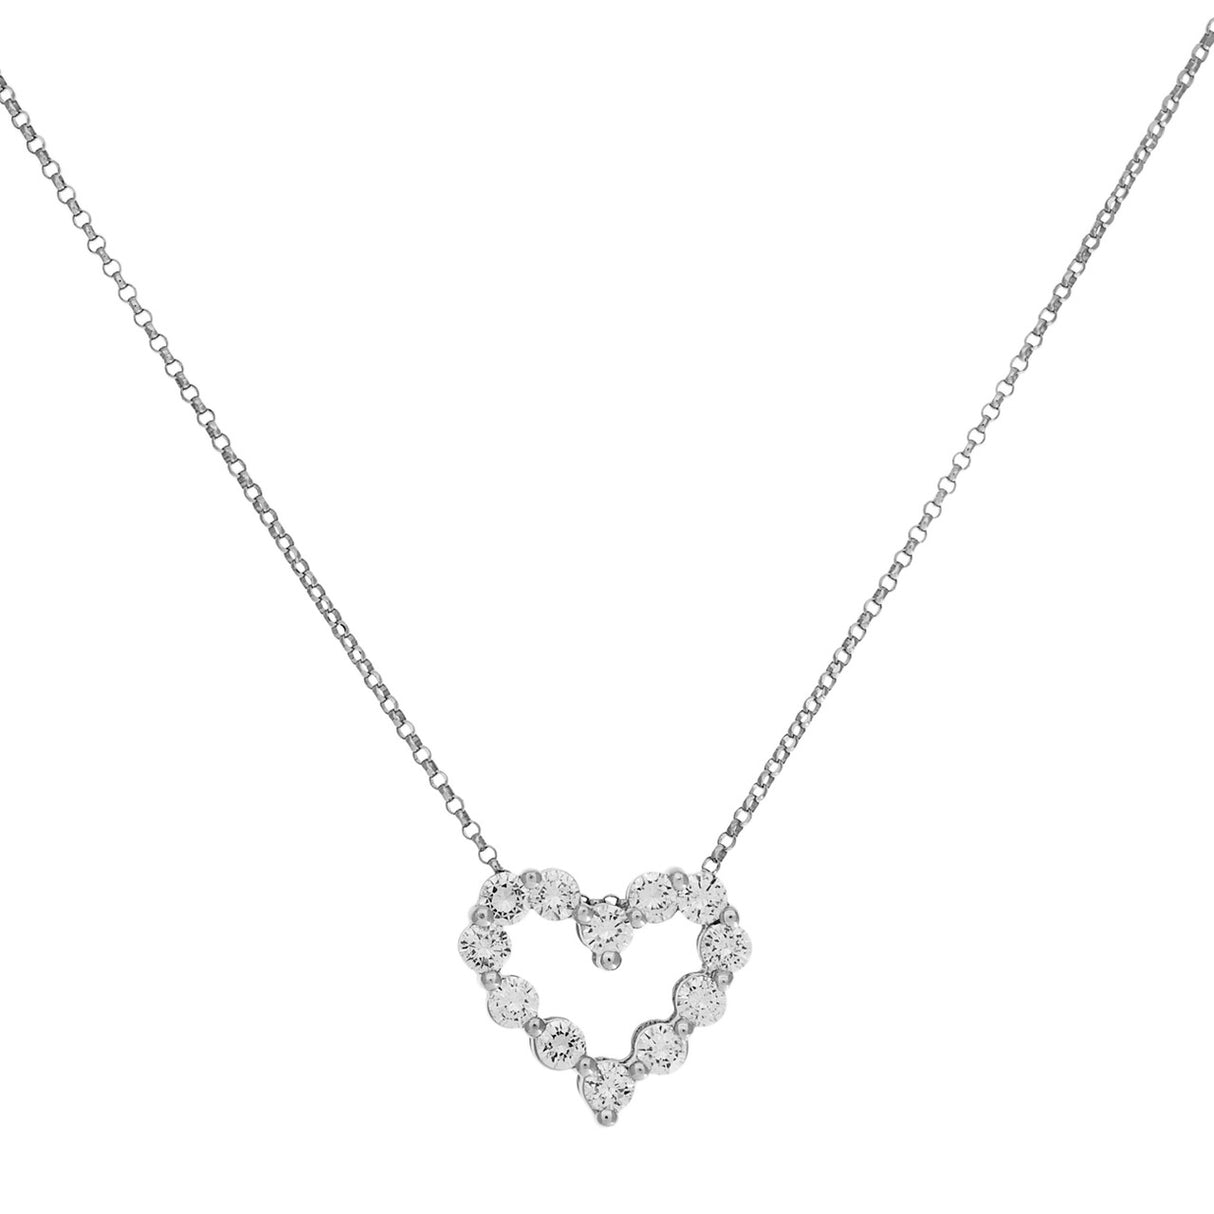 18K White Gold 1.02 Carat Diamond Heart Pendant Necklace